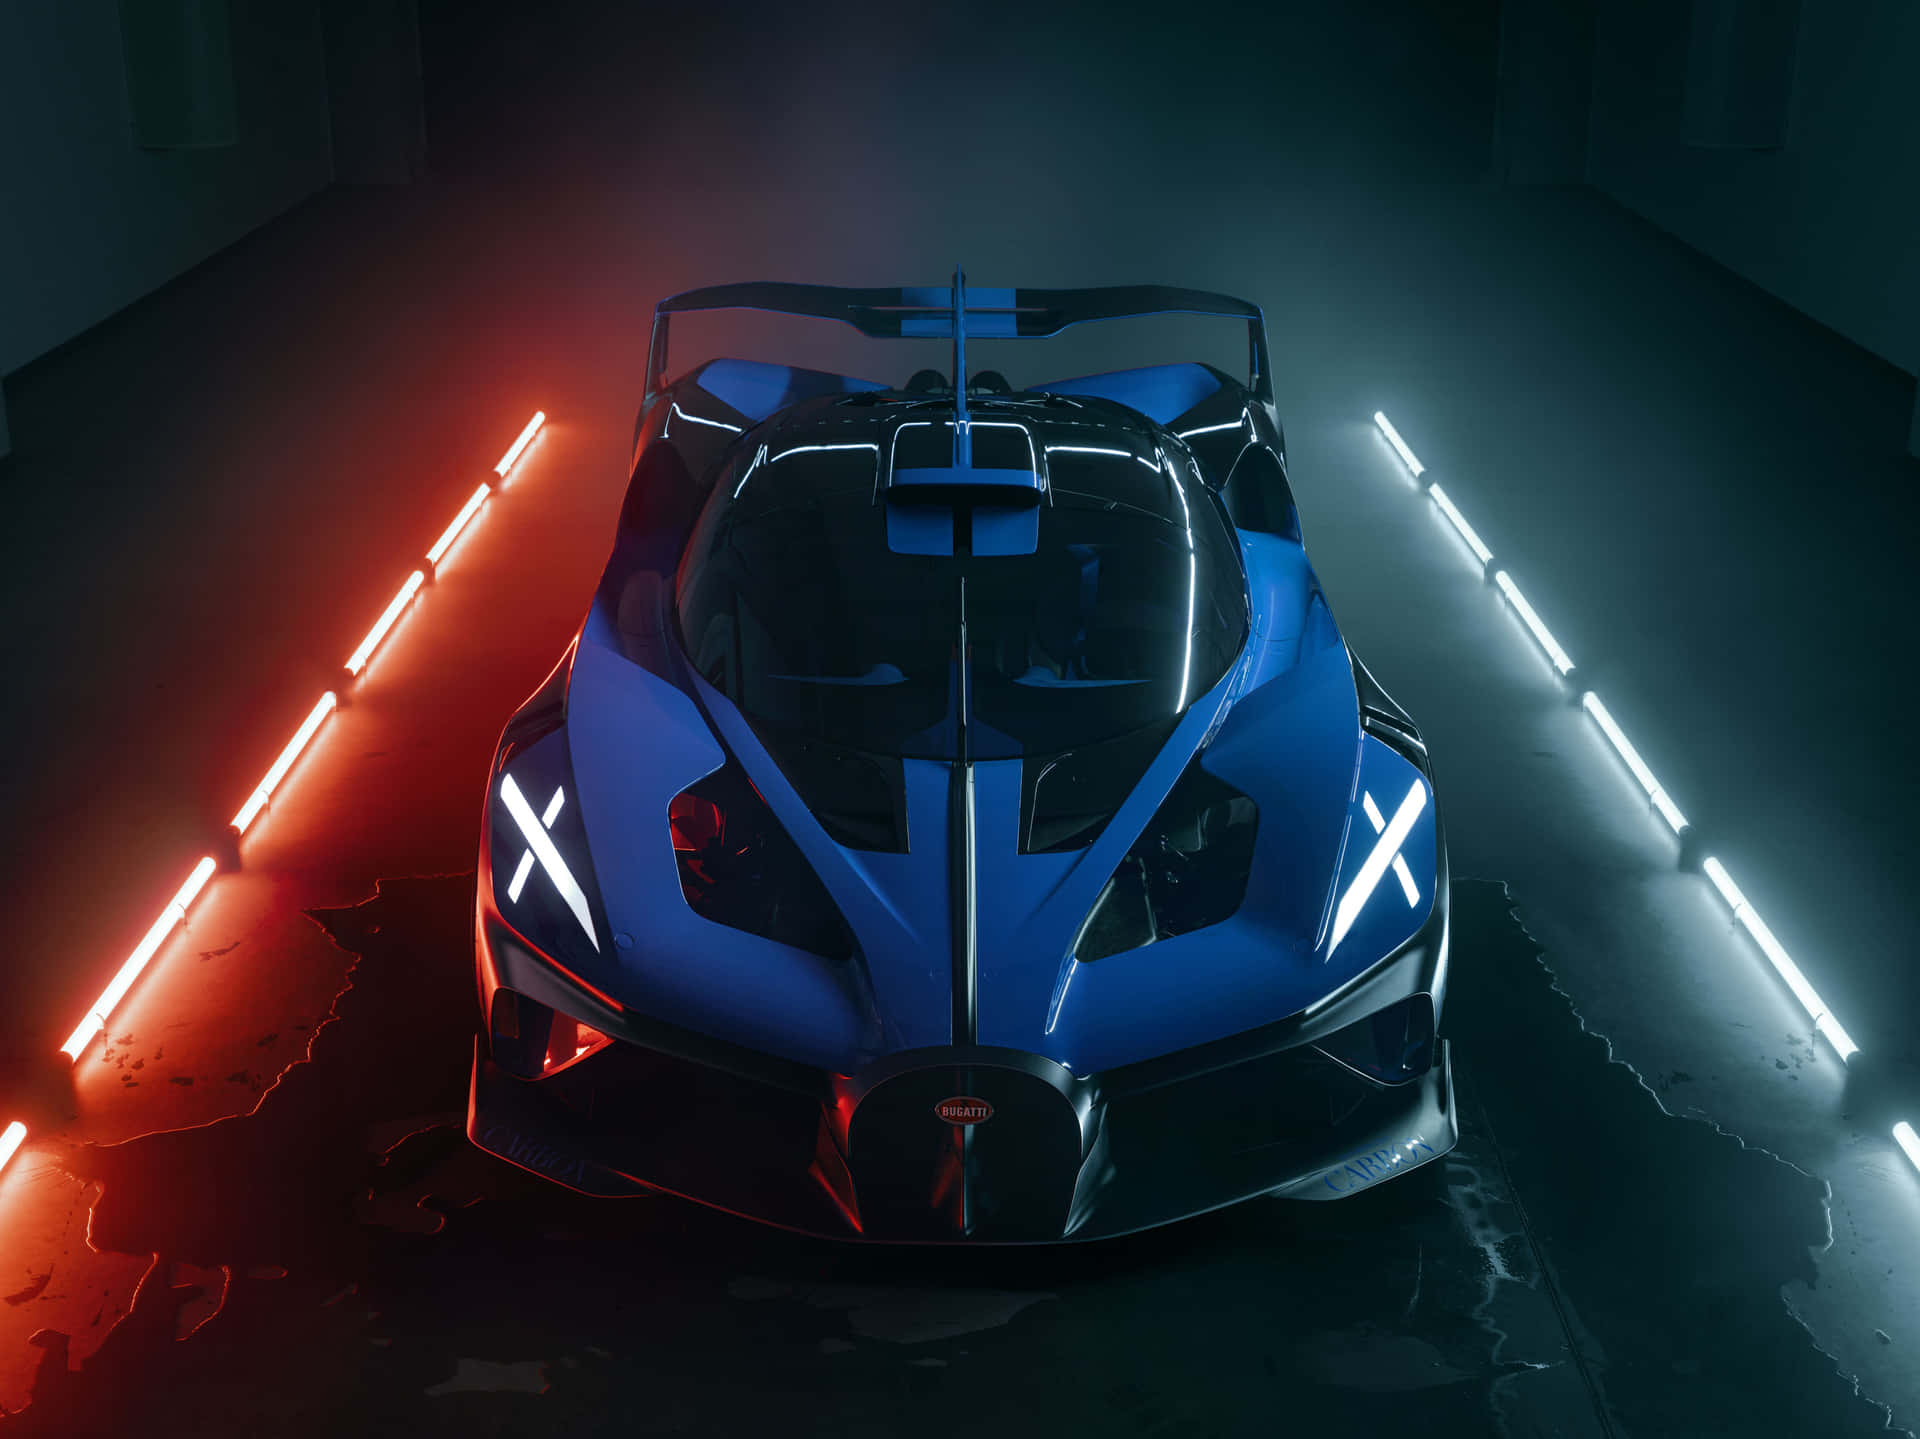 Cruise through the night in this stunning Neon Bugatti Wallpaper